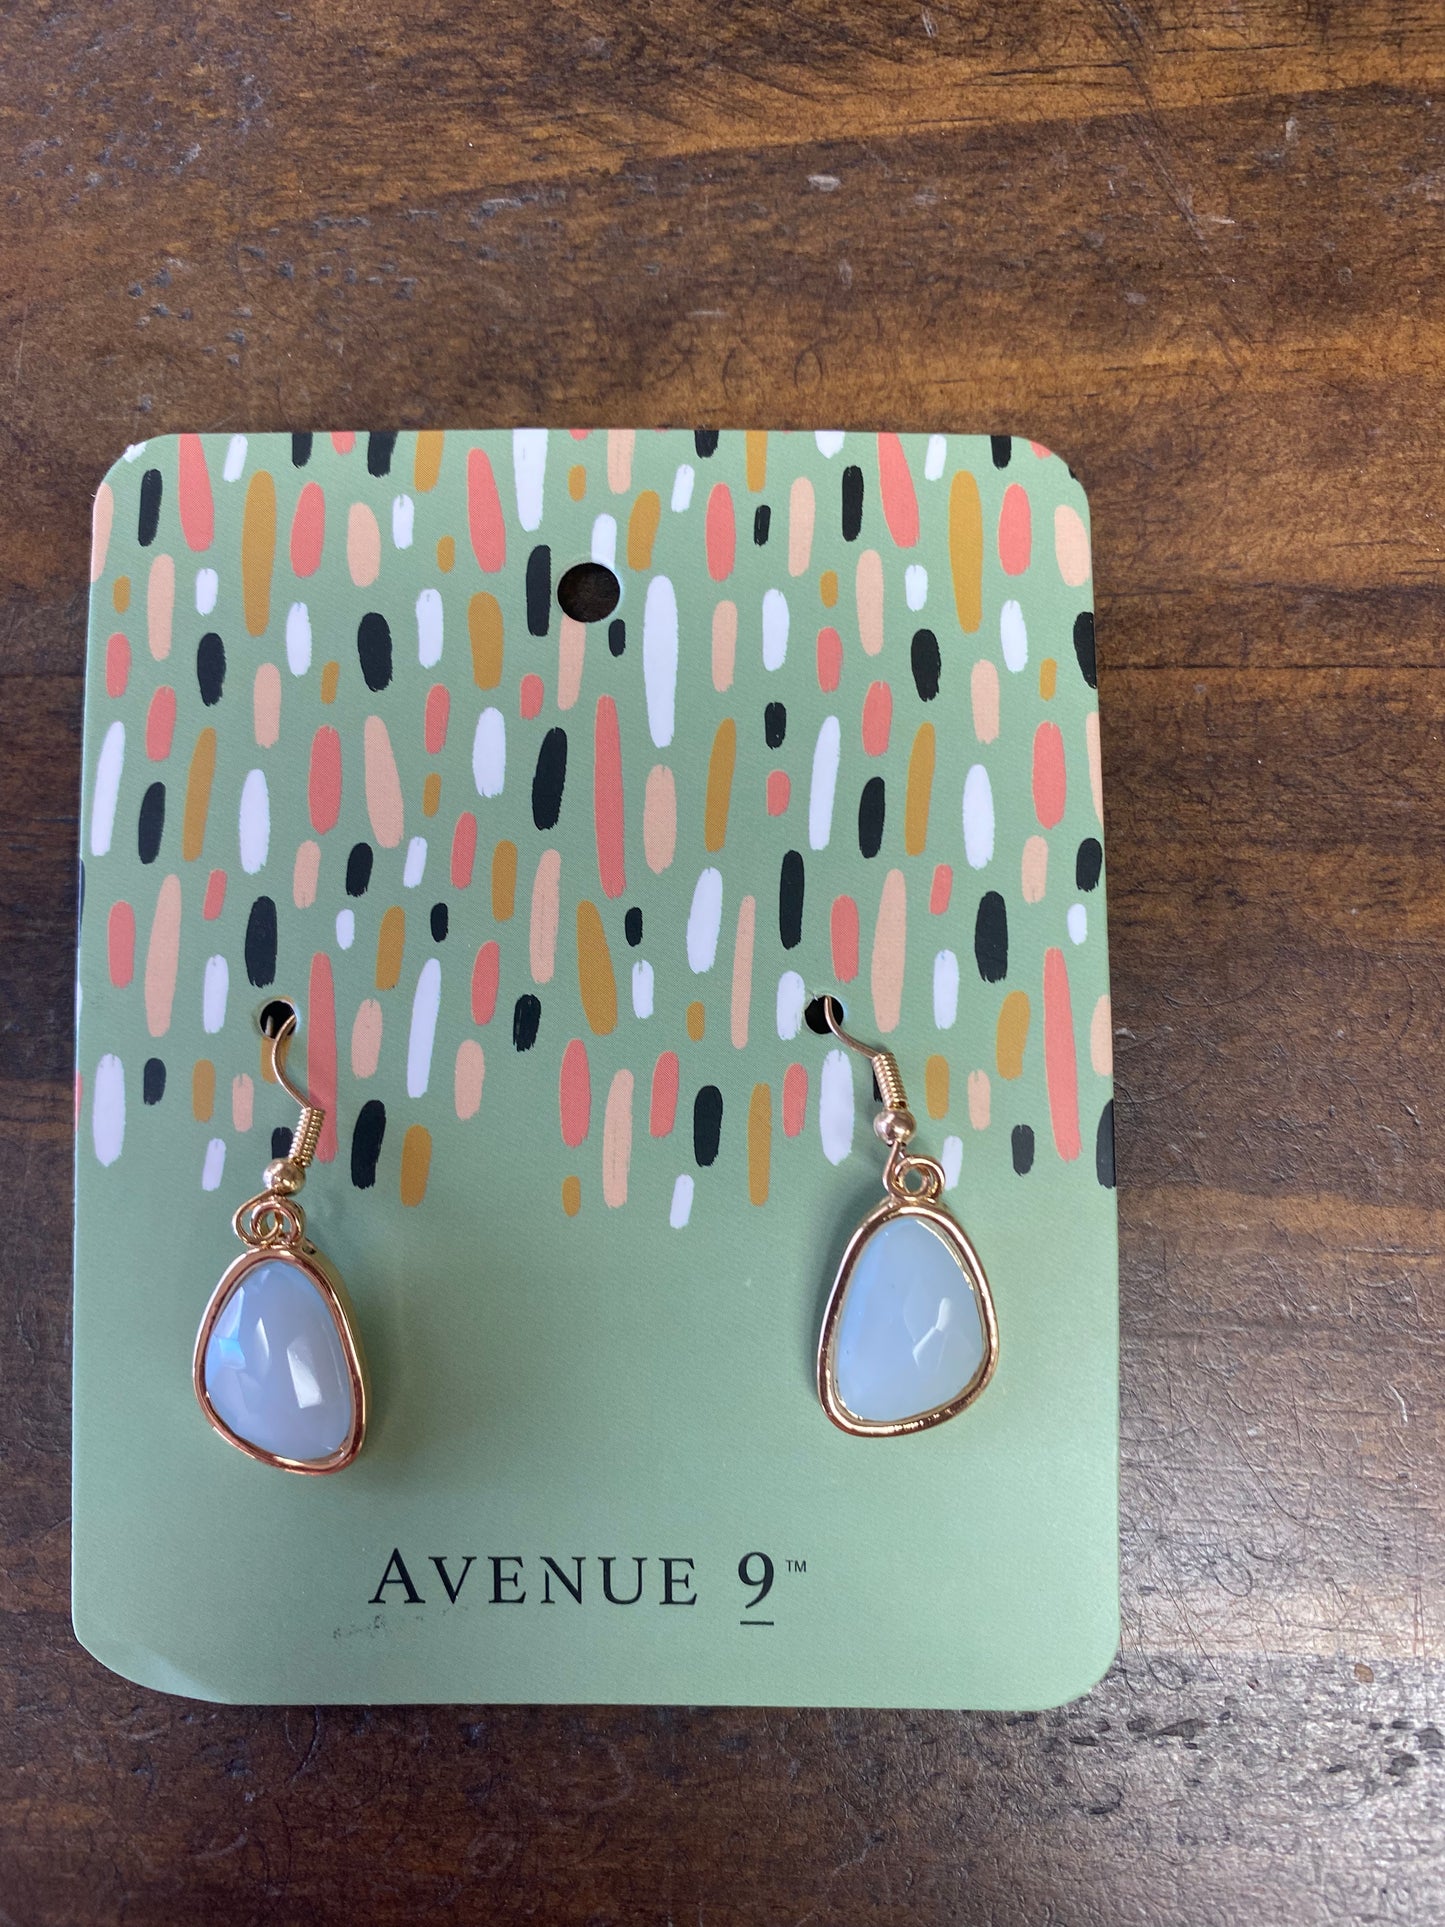 Avenue 9 Earrings - Whitt & Co. Clothing